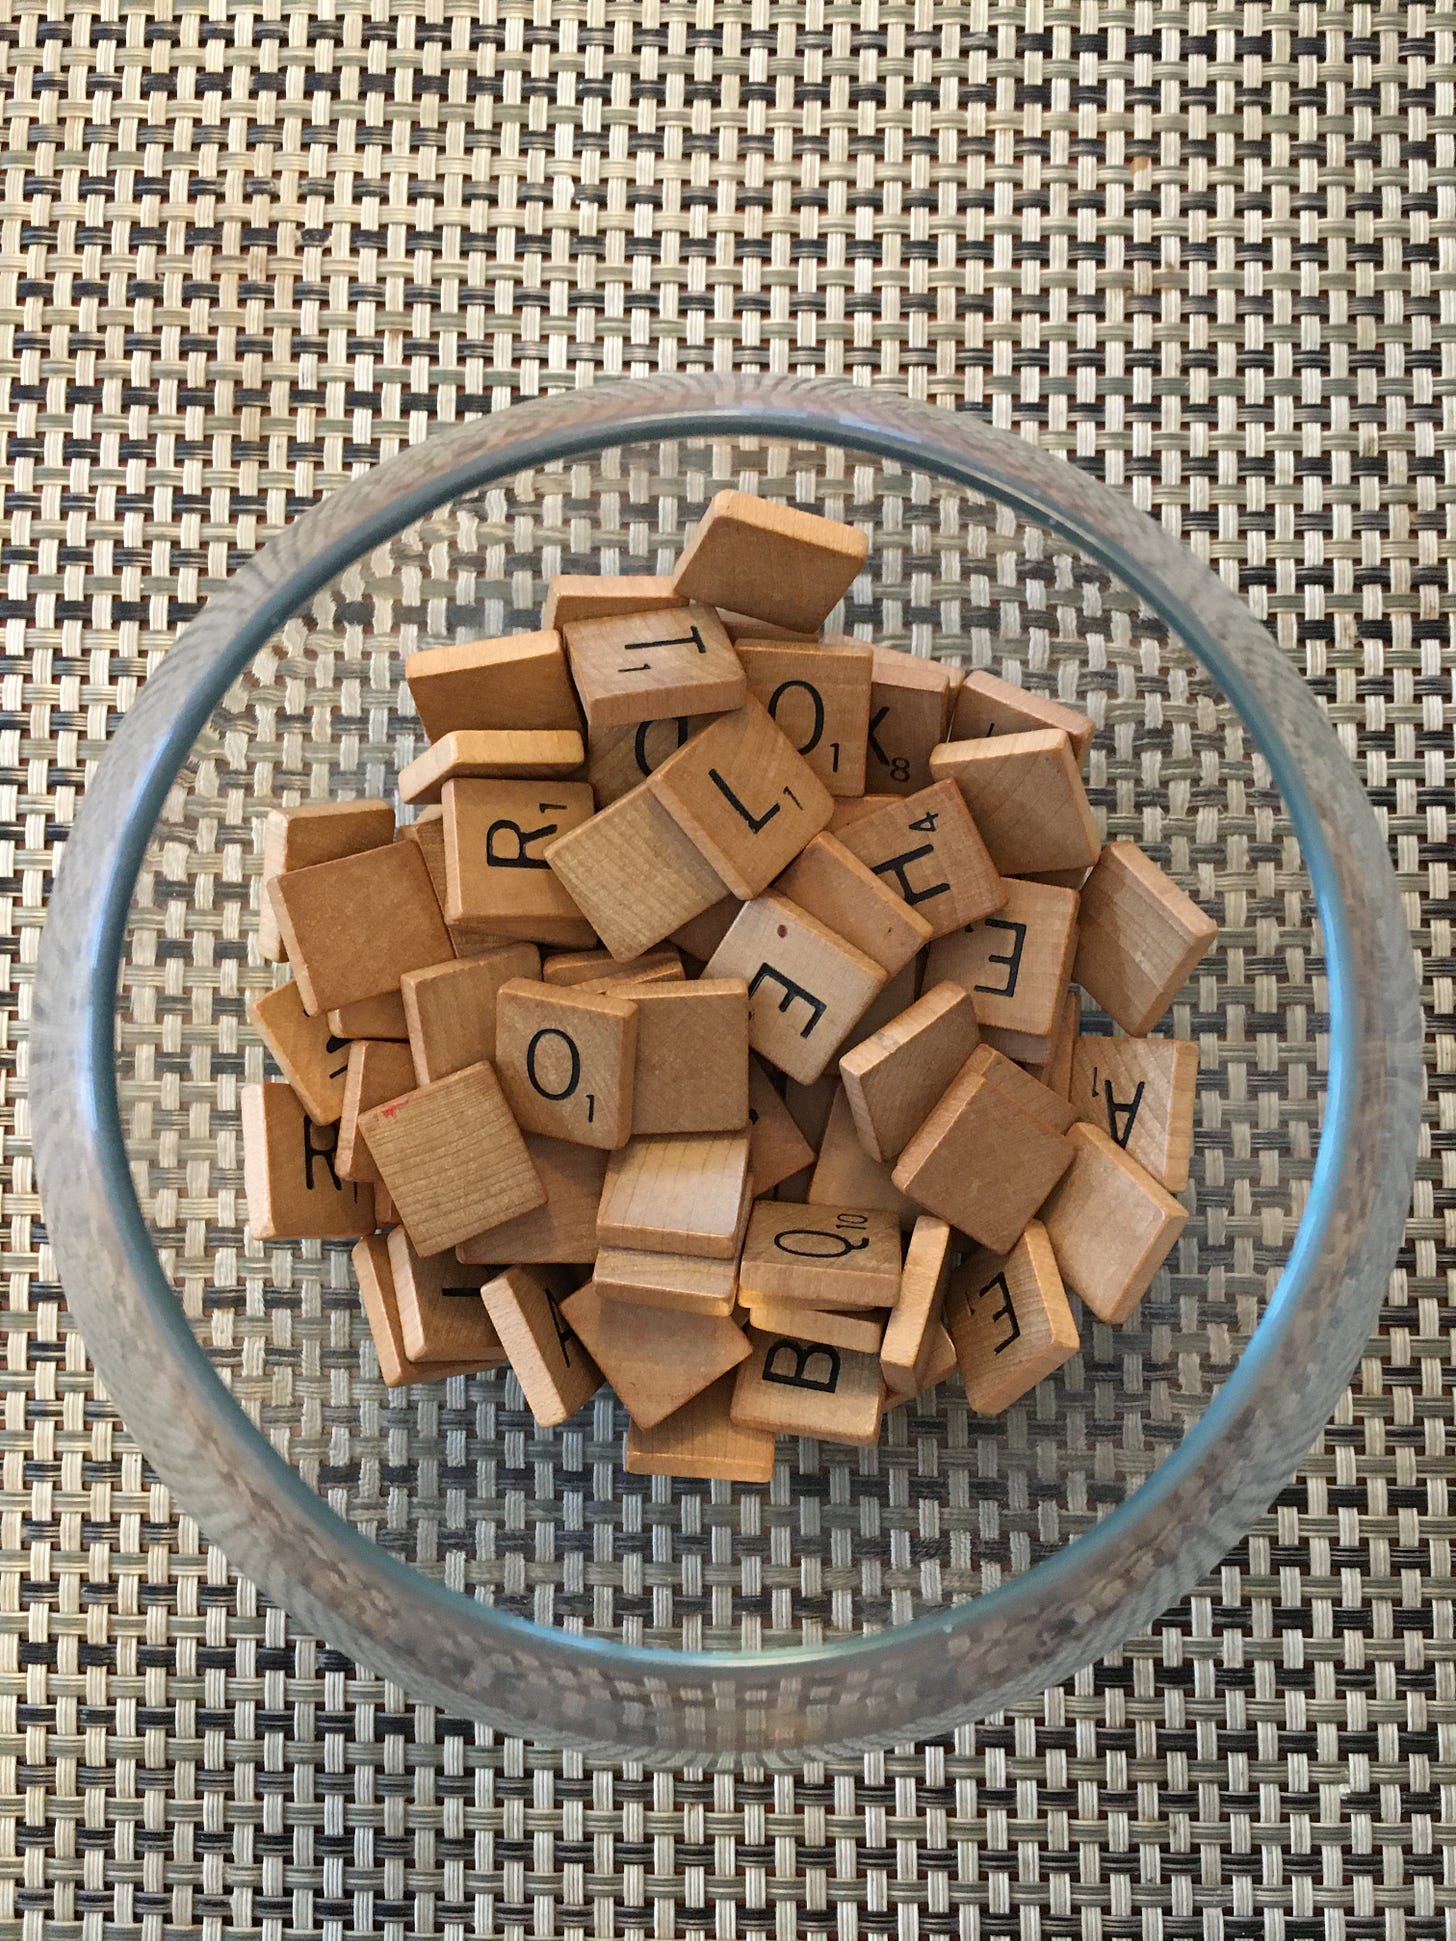 Scrabble tiles in a bowl